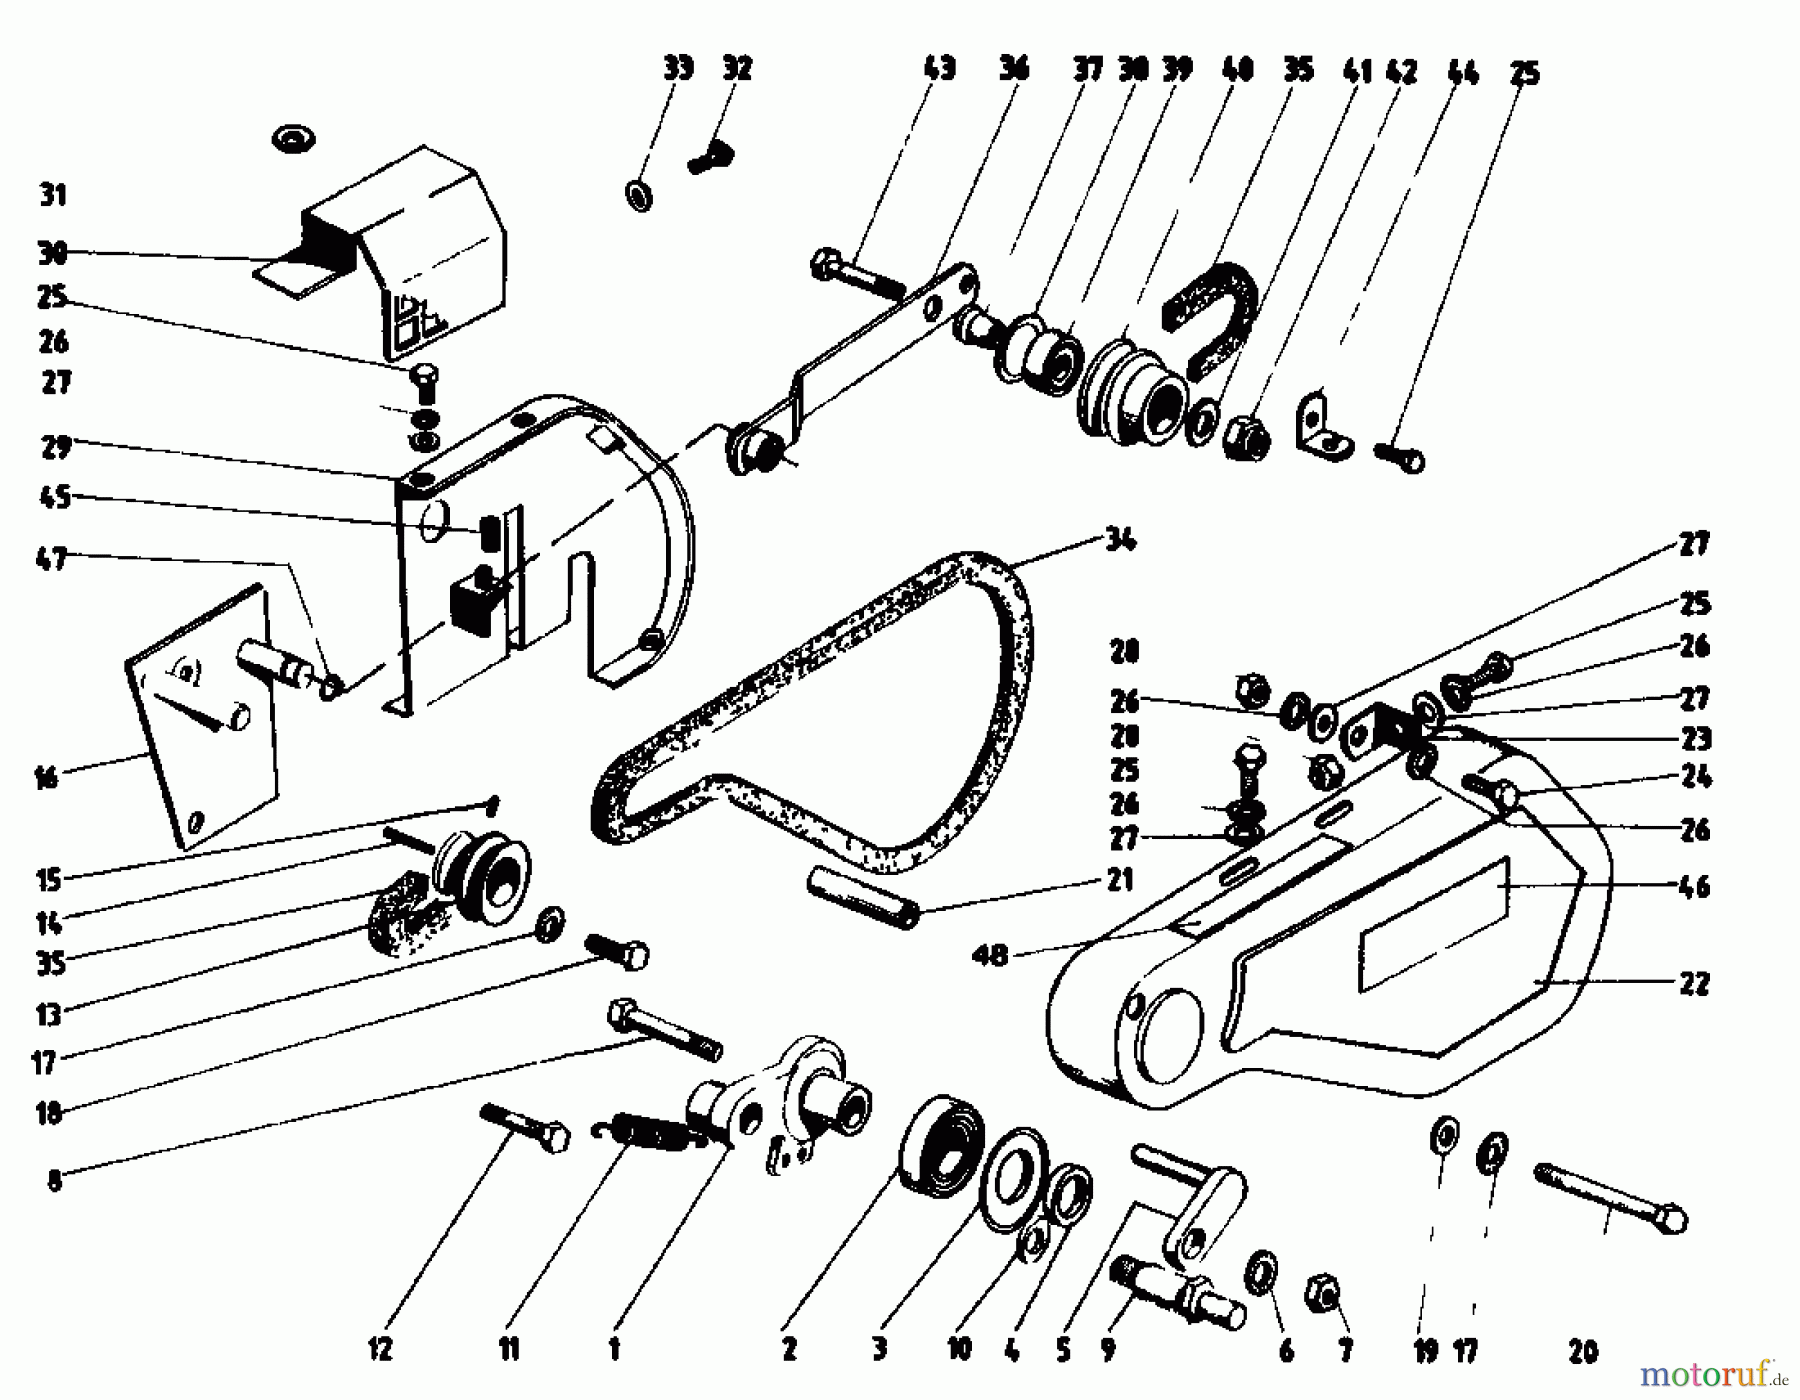  Gutbrod Motobineuse MB 60-52 07512.09  (1986) Entraînement de roulement